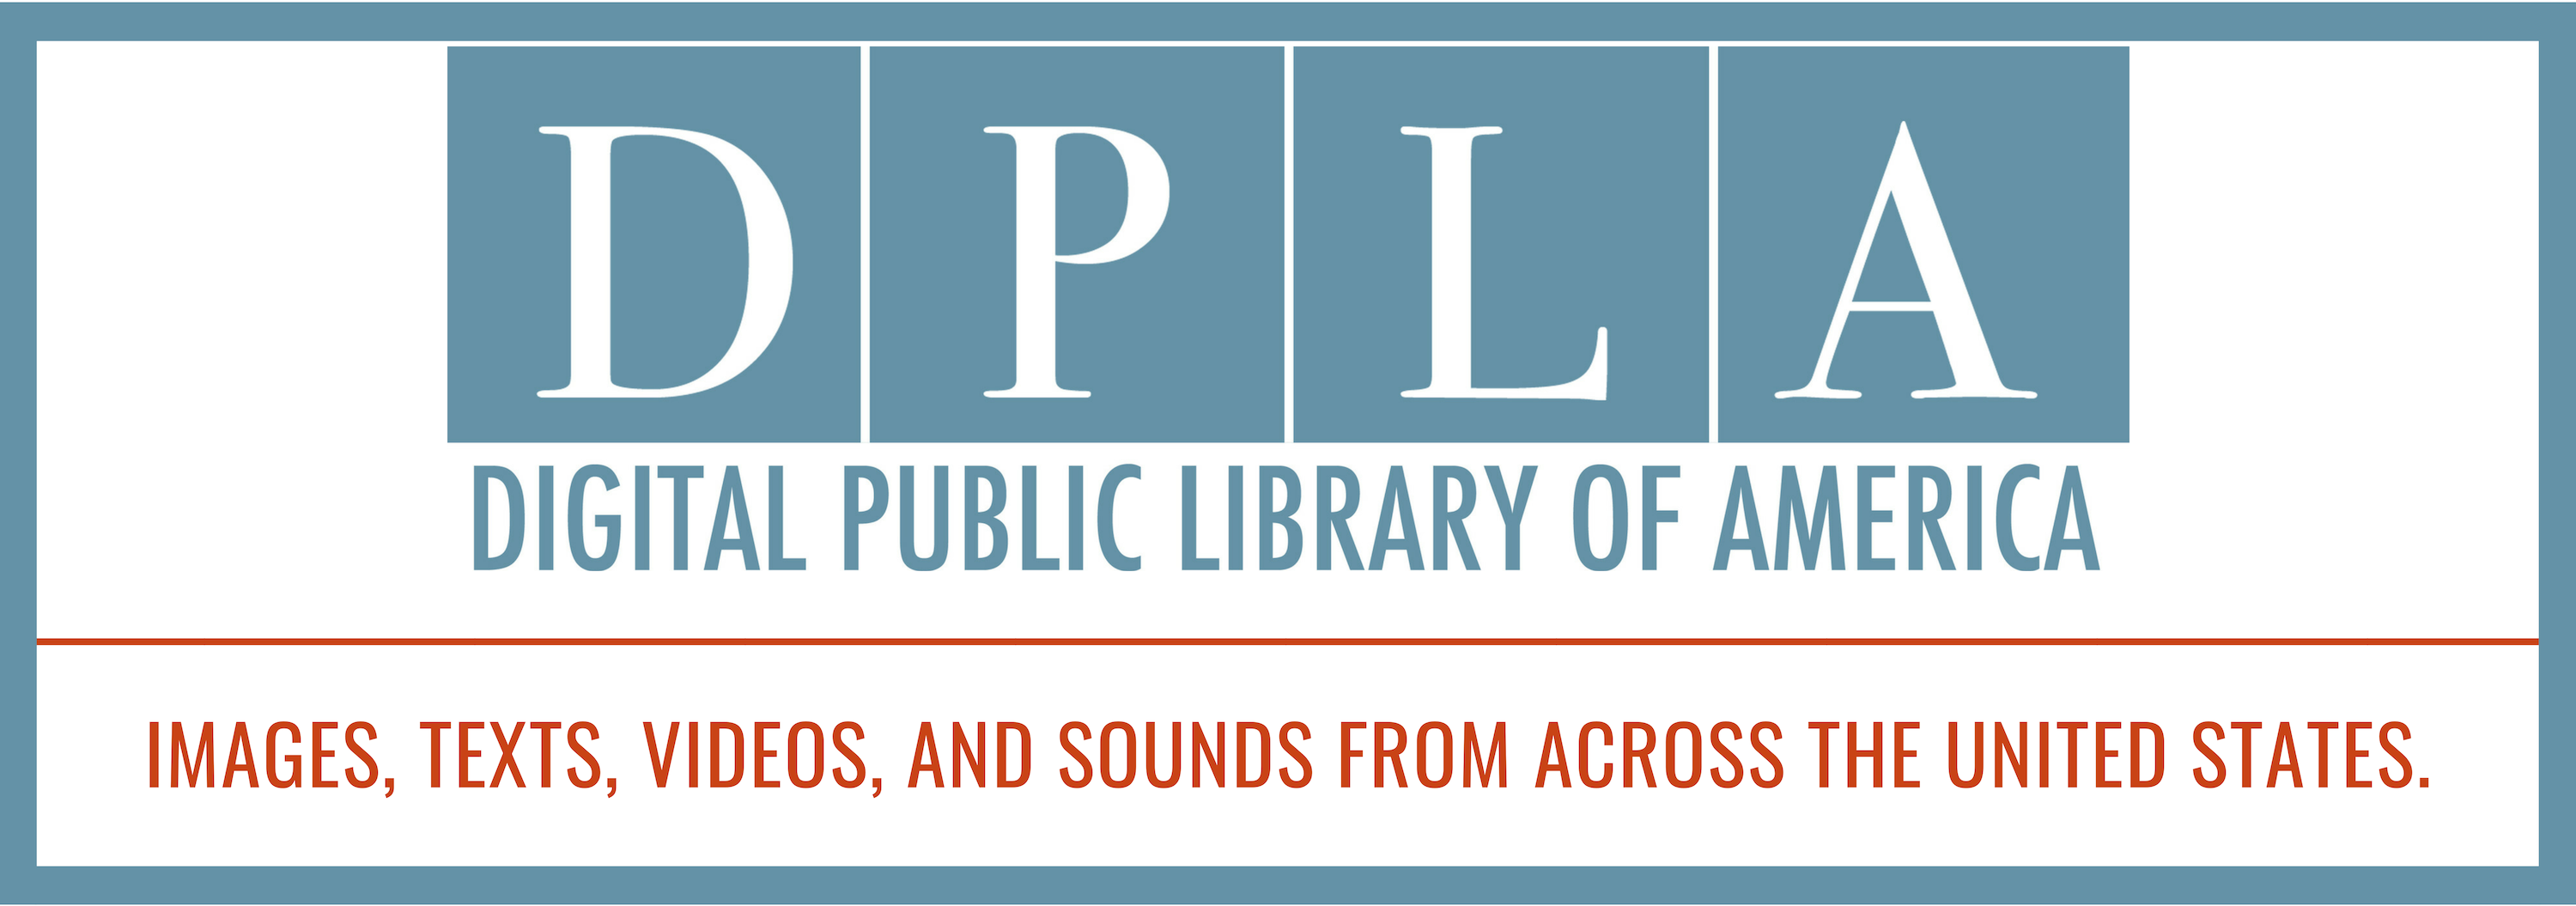 Digital Public Library of America logo and tagline